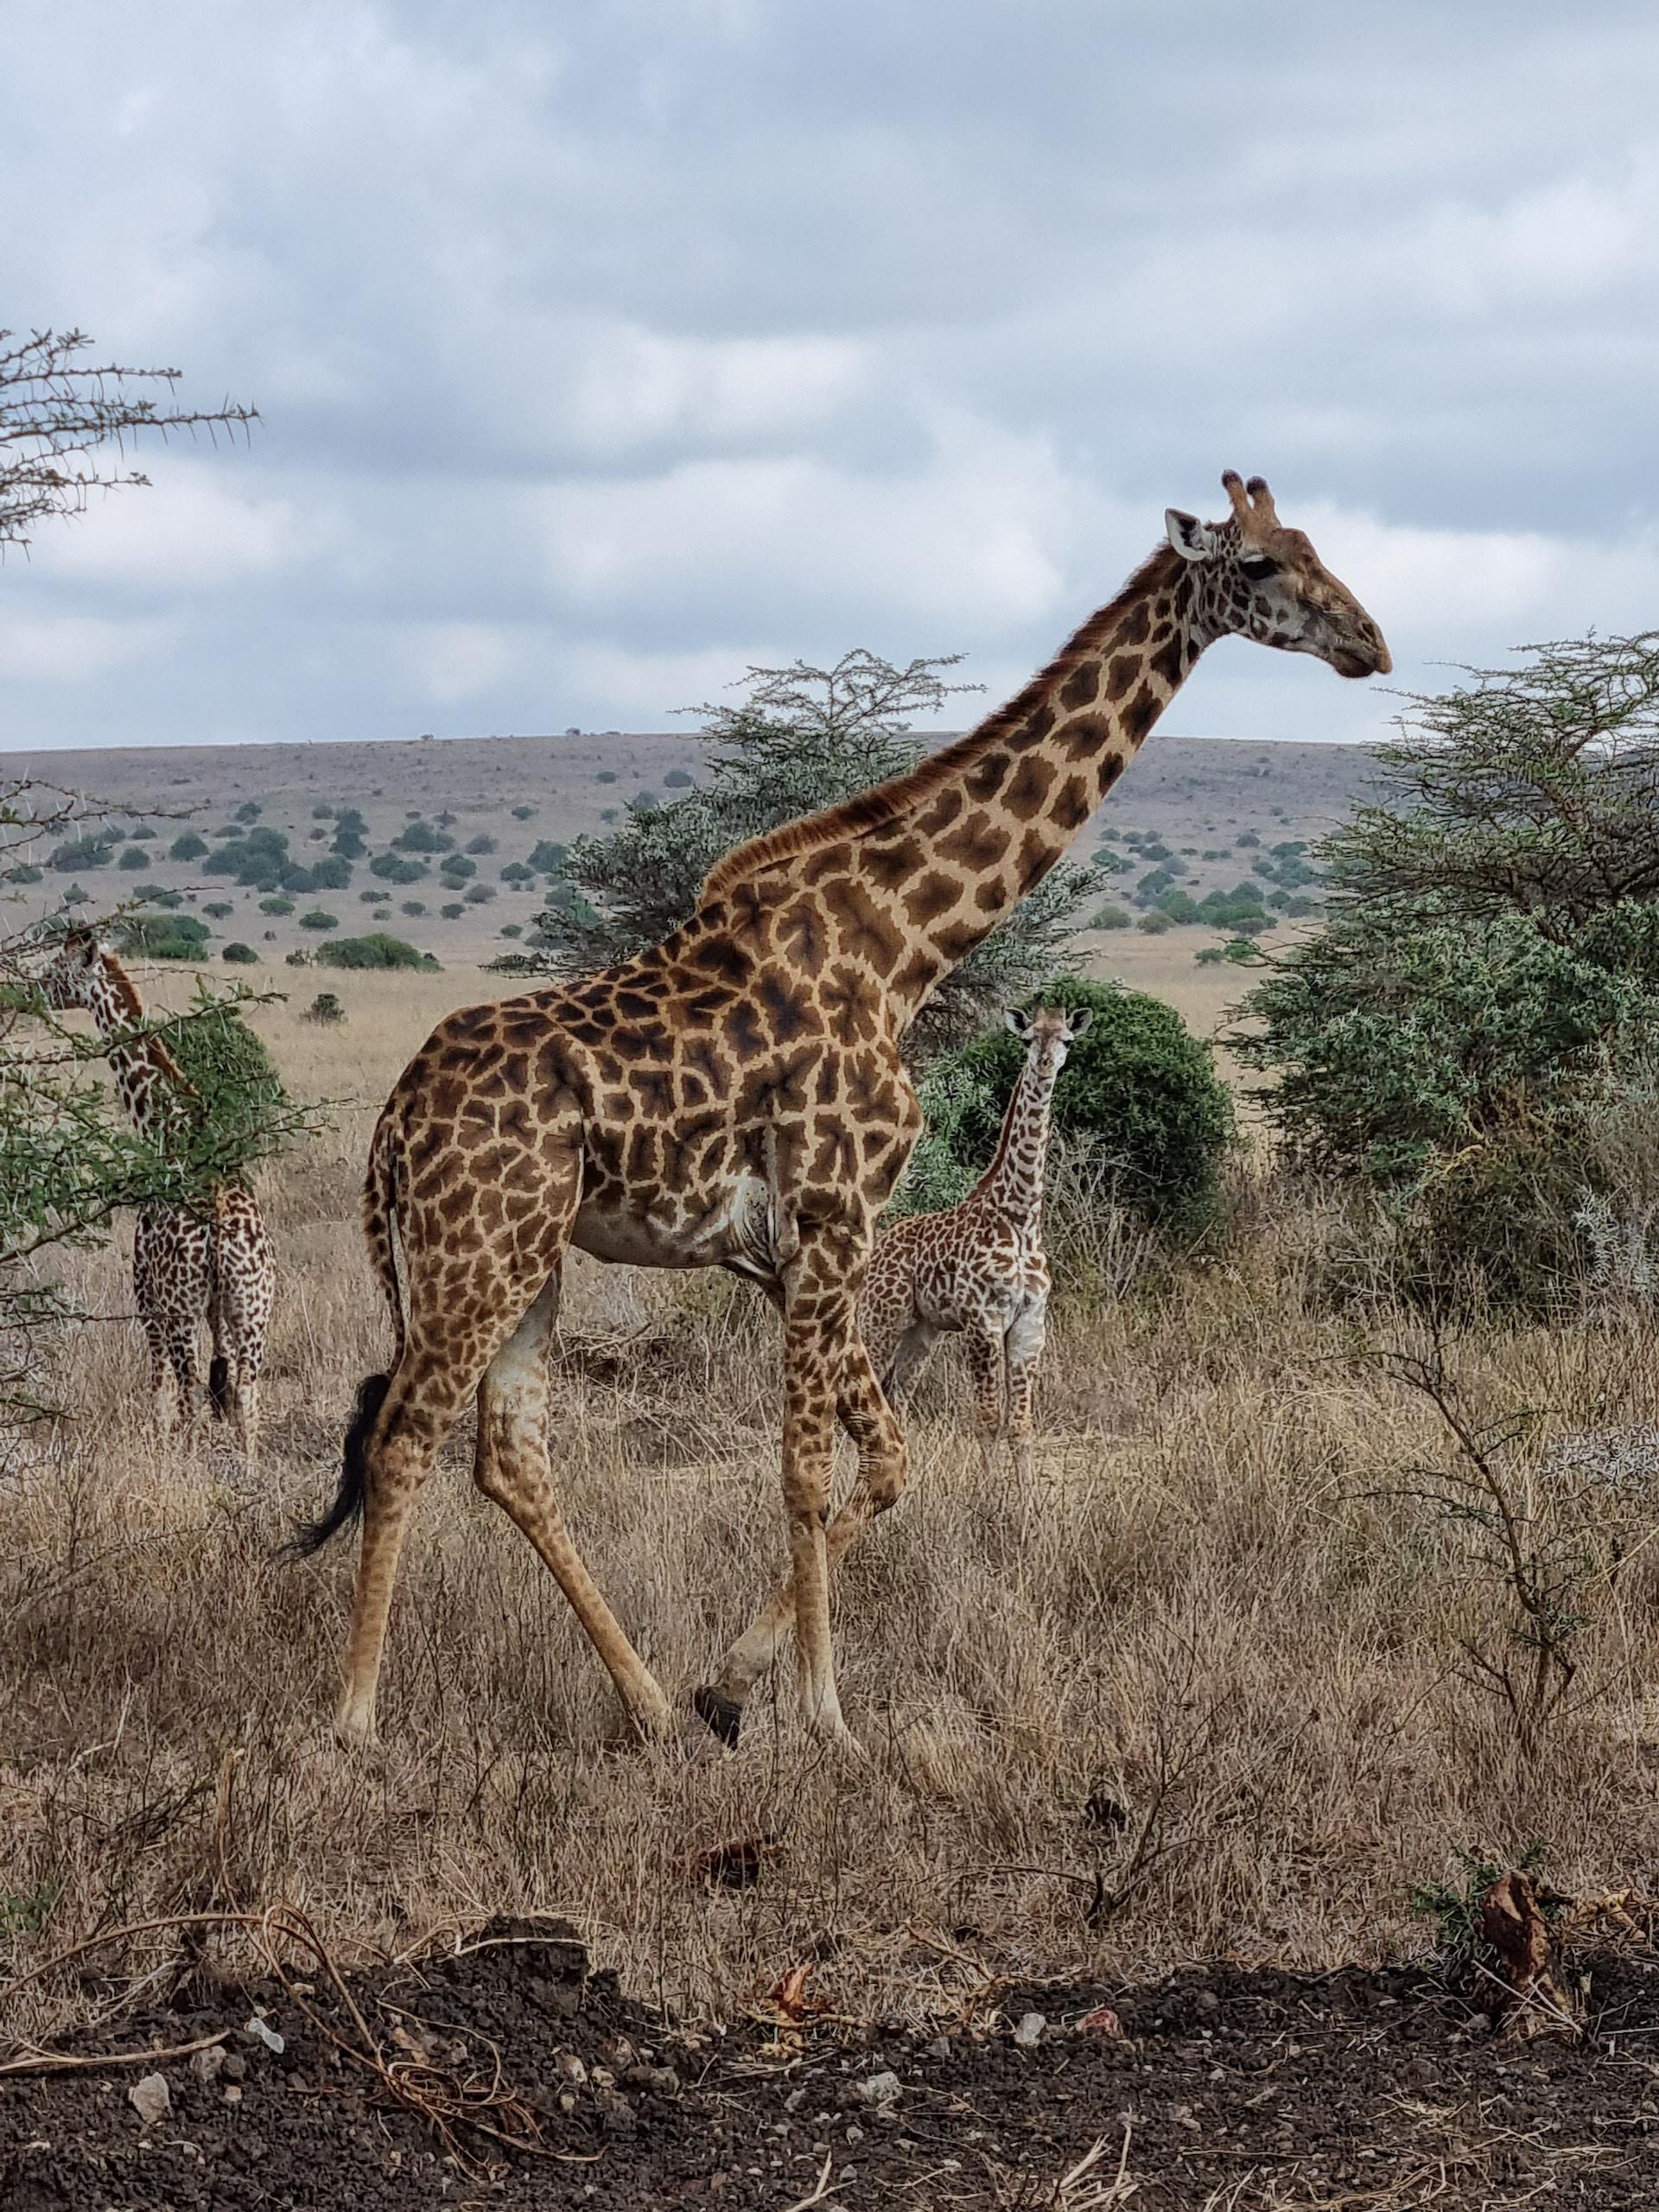 Half Day Nairobi National Park Tour: Exploring Wildlife In The City